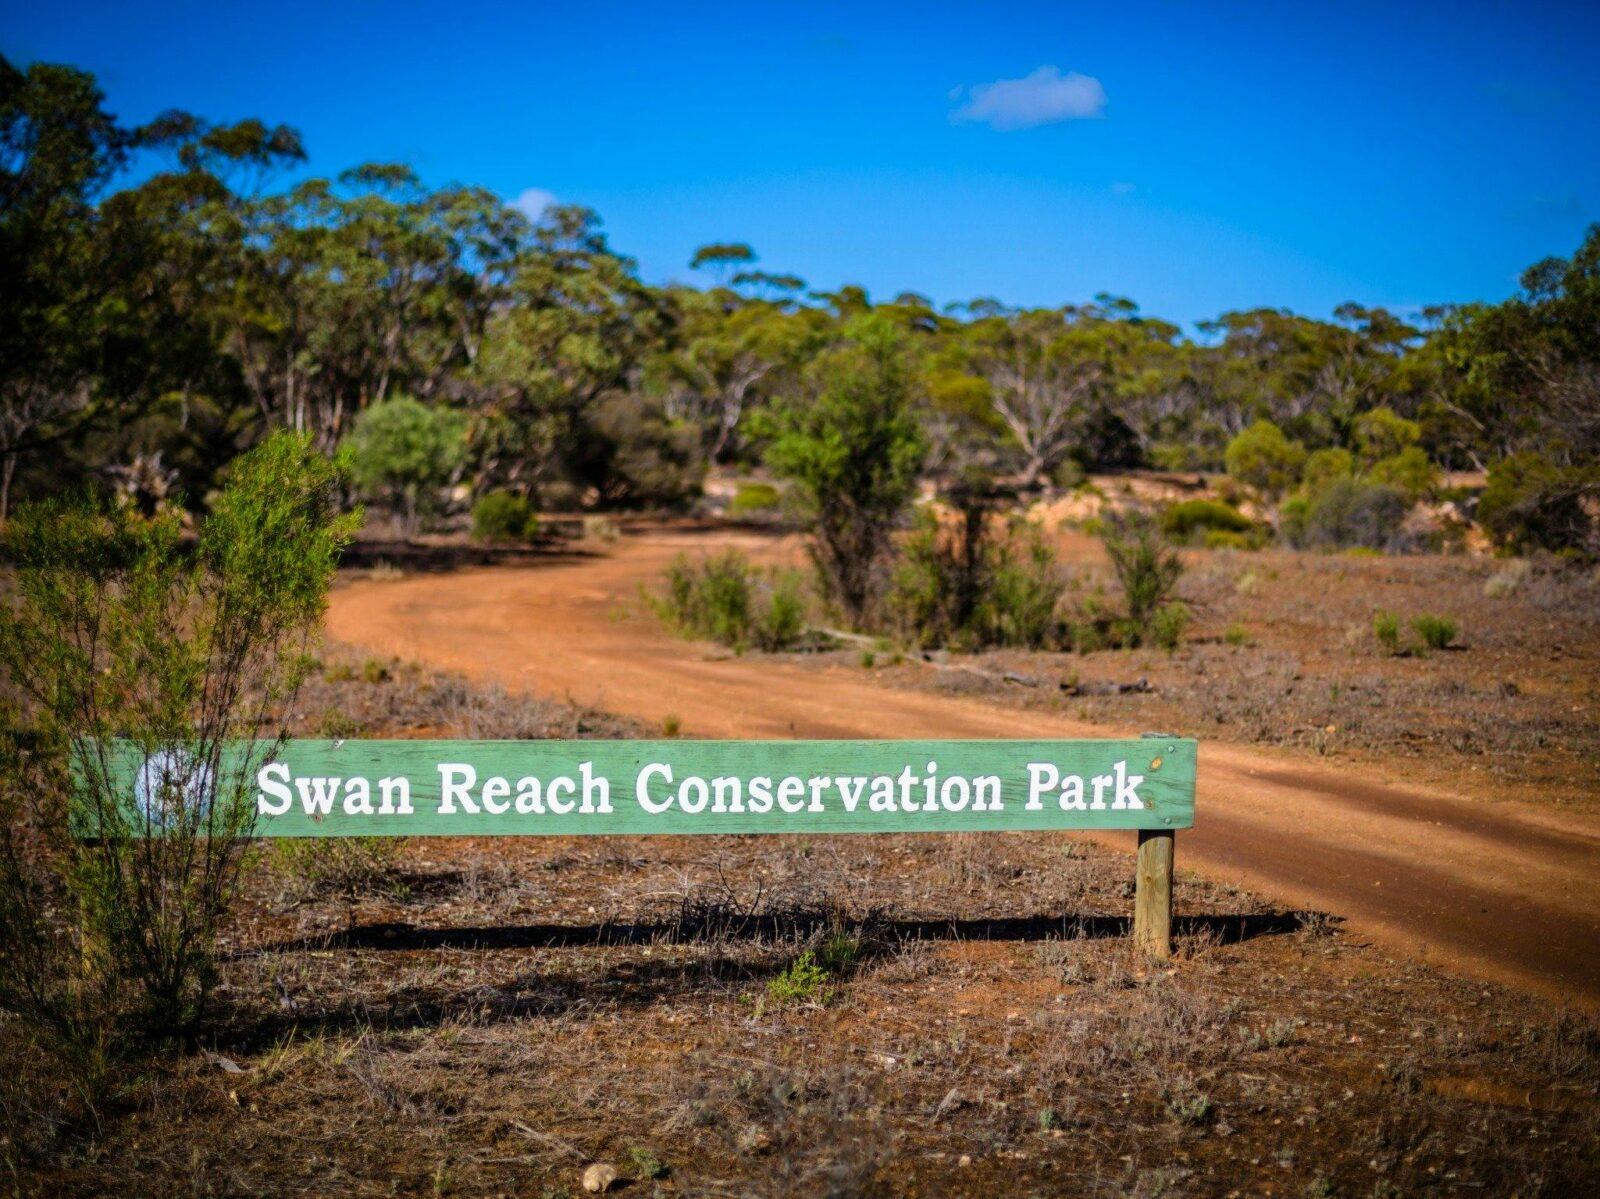 Swan Reach Conservation Park